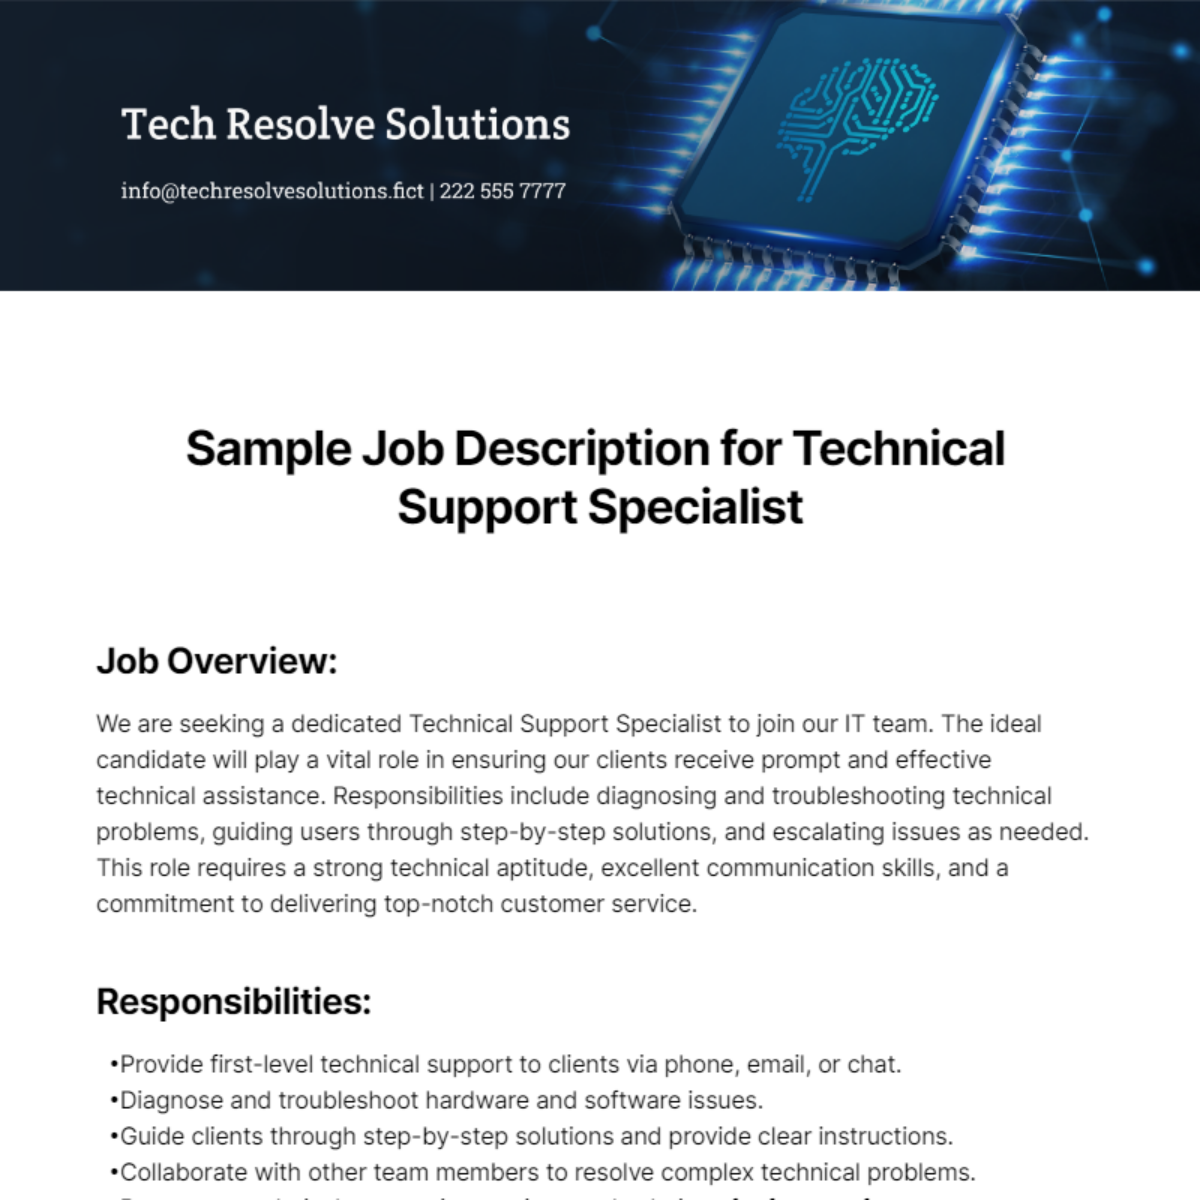 Sample Job Description for Technical Support Specialist Template